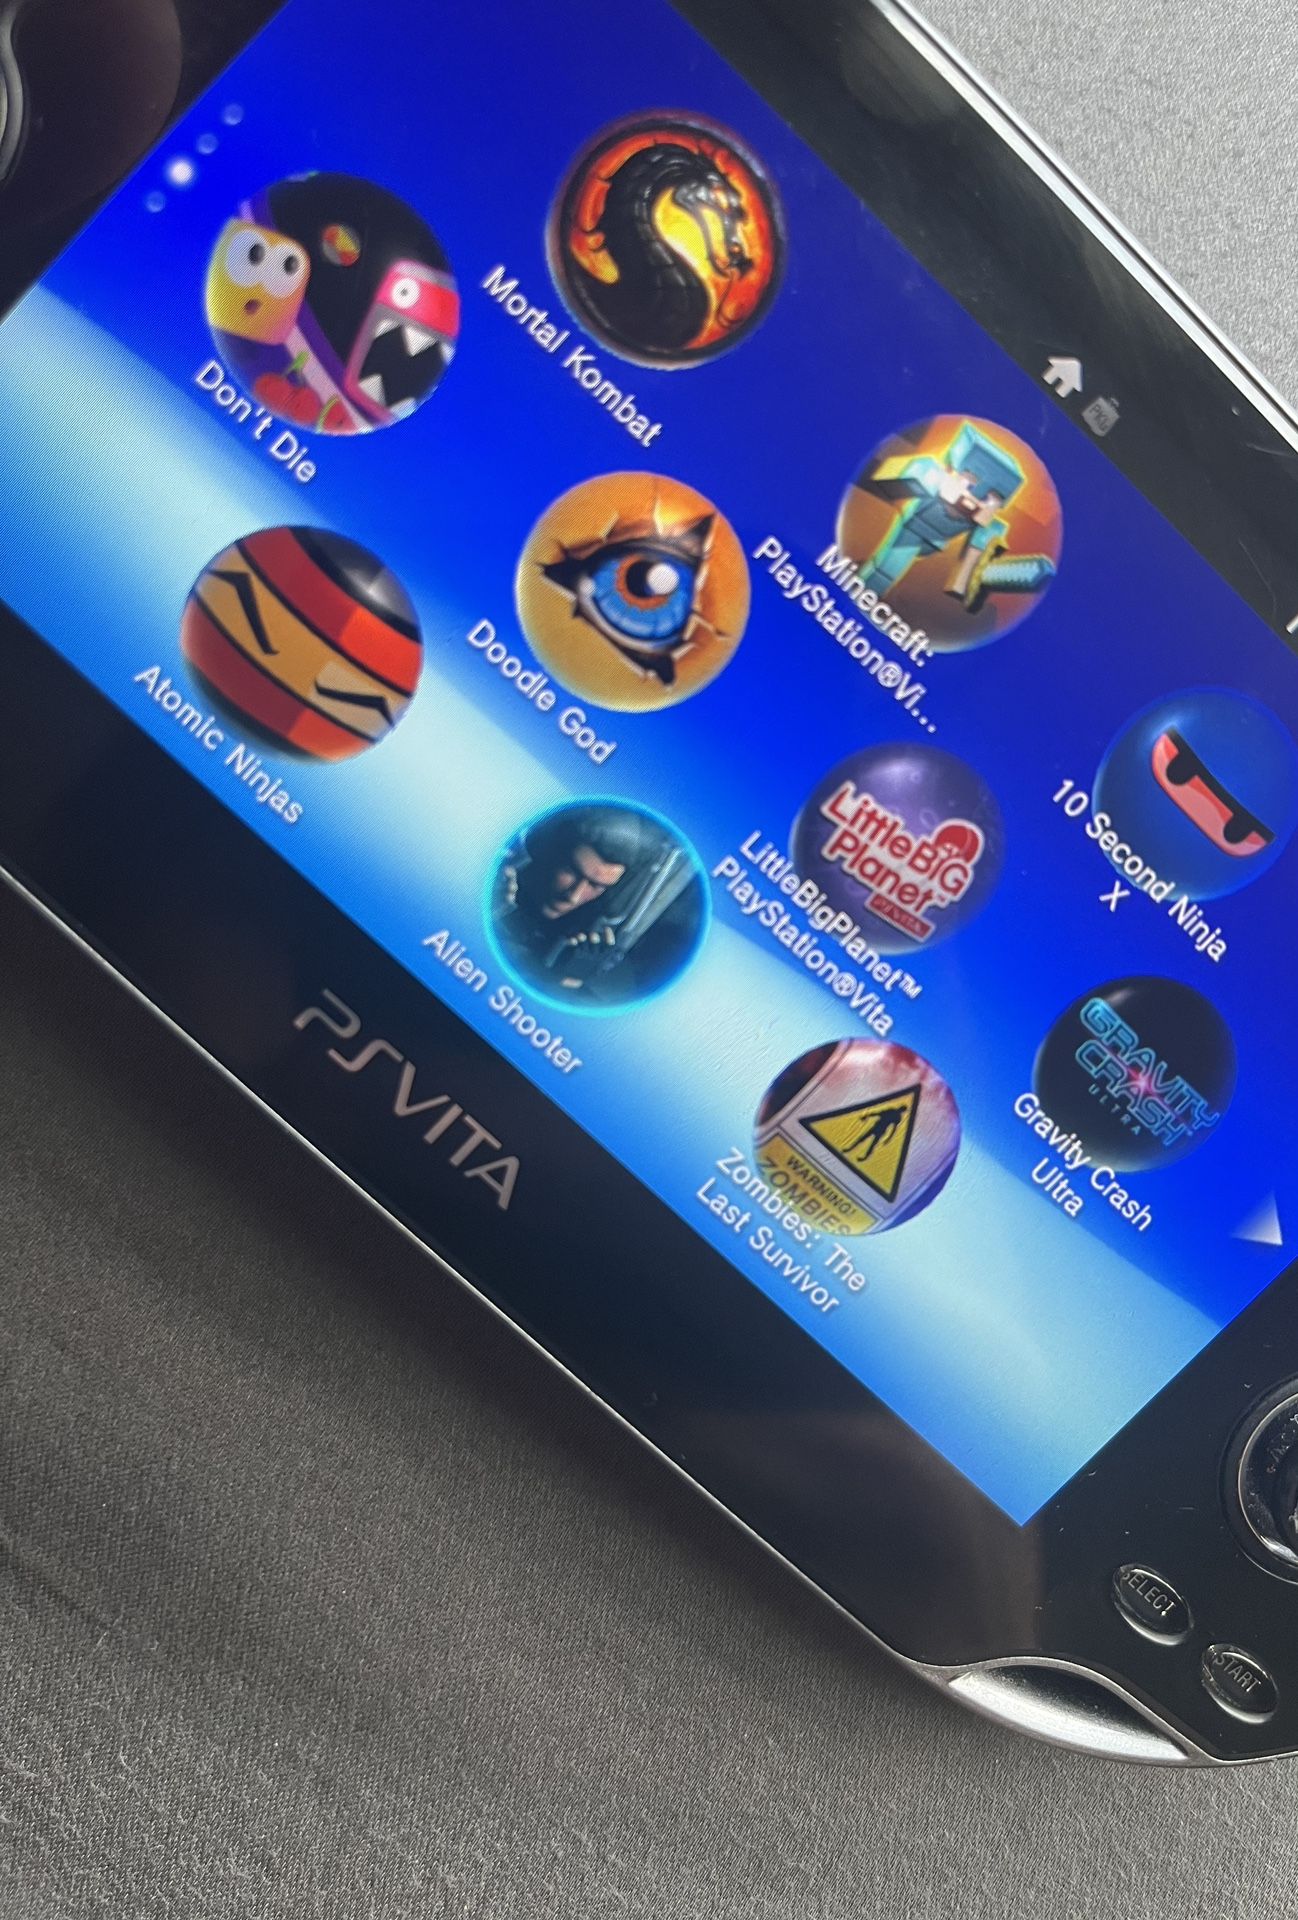 Modded Playstation Vita (OBO)